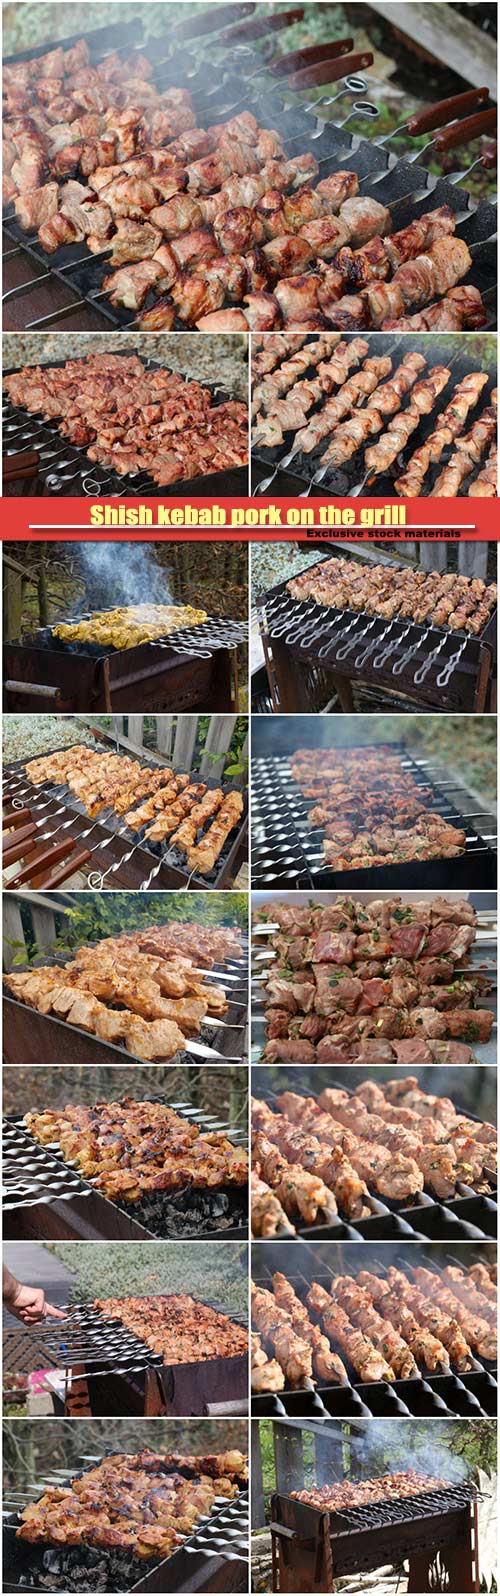 Shish kebab pork on the grill